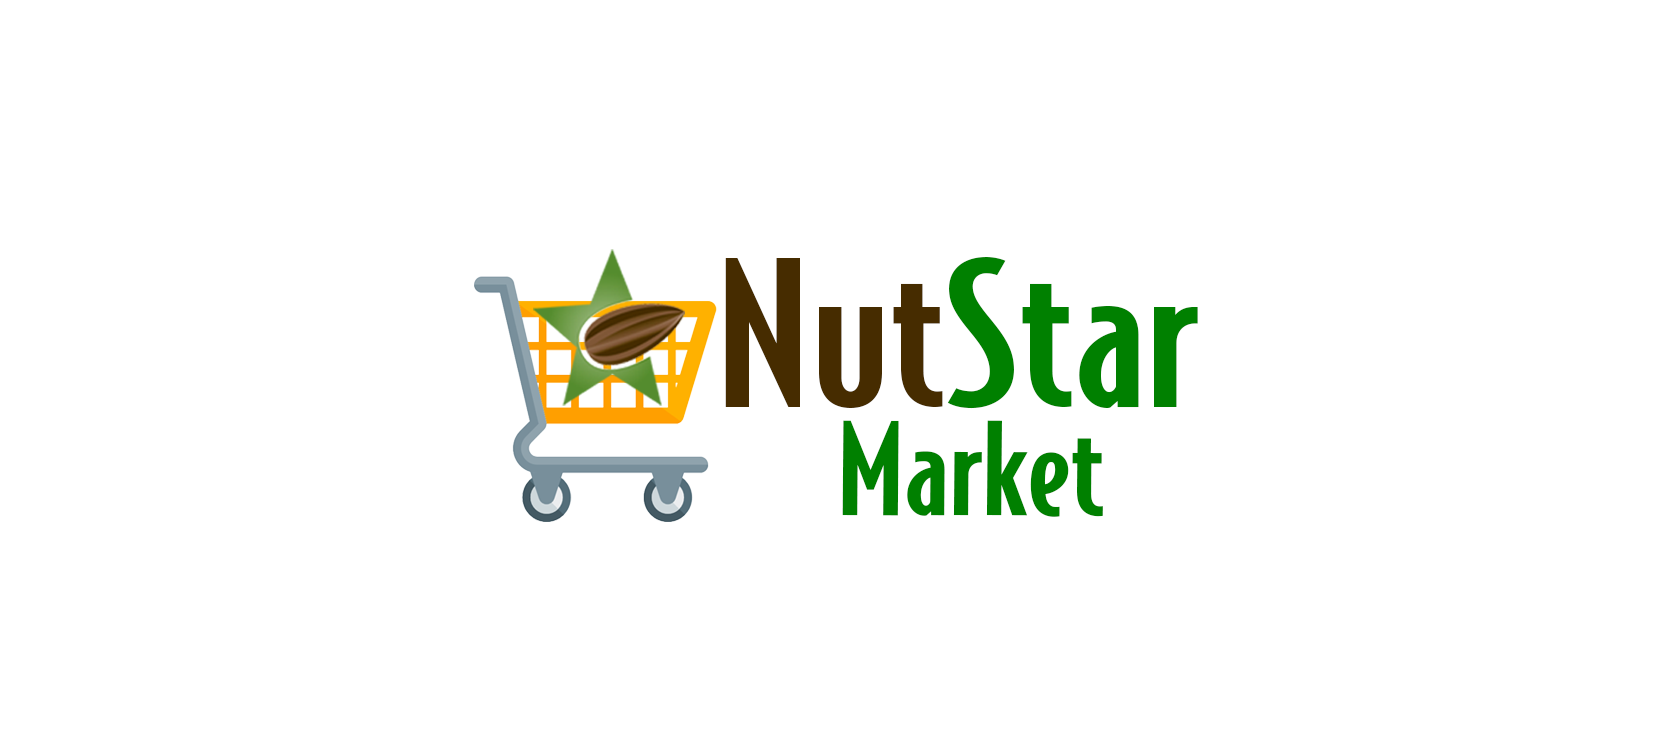 Introducing “NutStar Market”